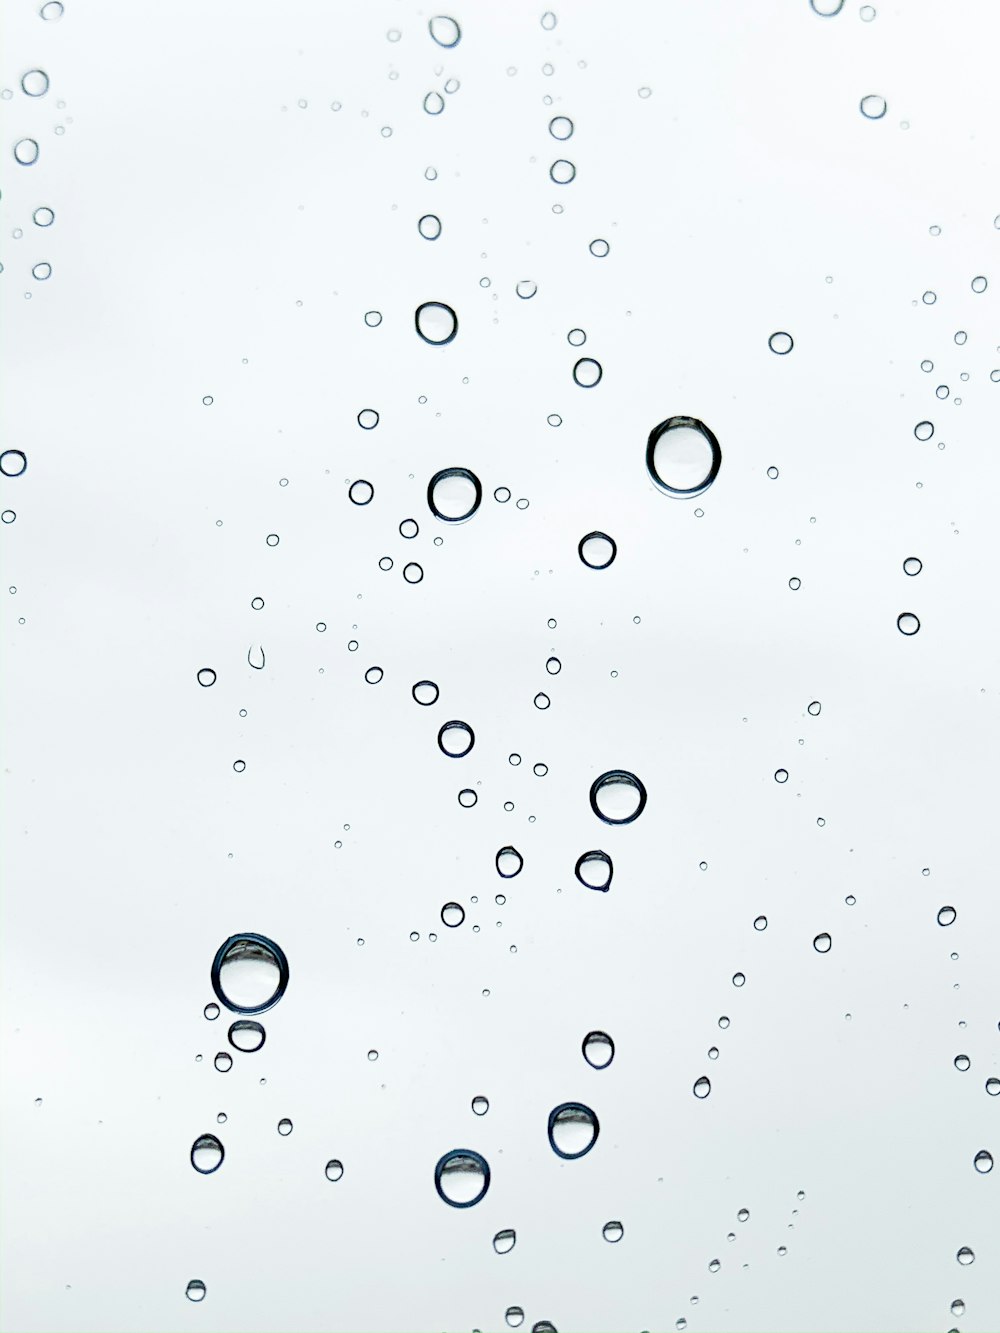 750+ Bubbles Pictures [HQ]  Download Free Images on Unsplash